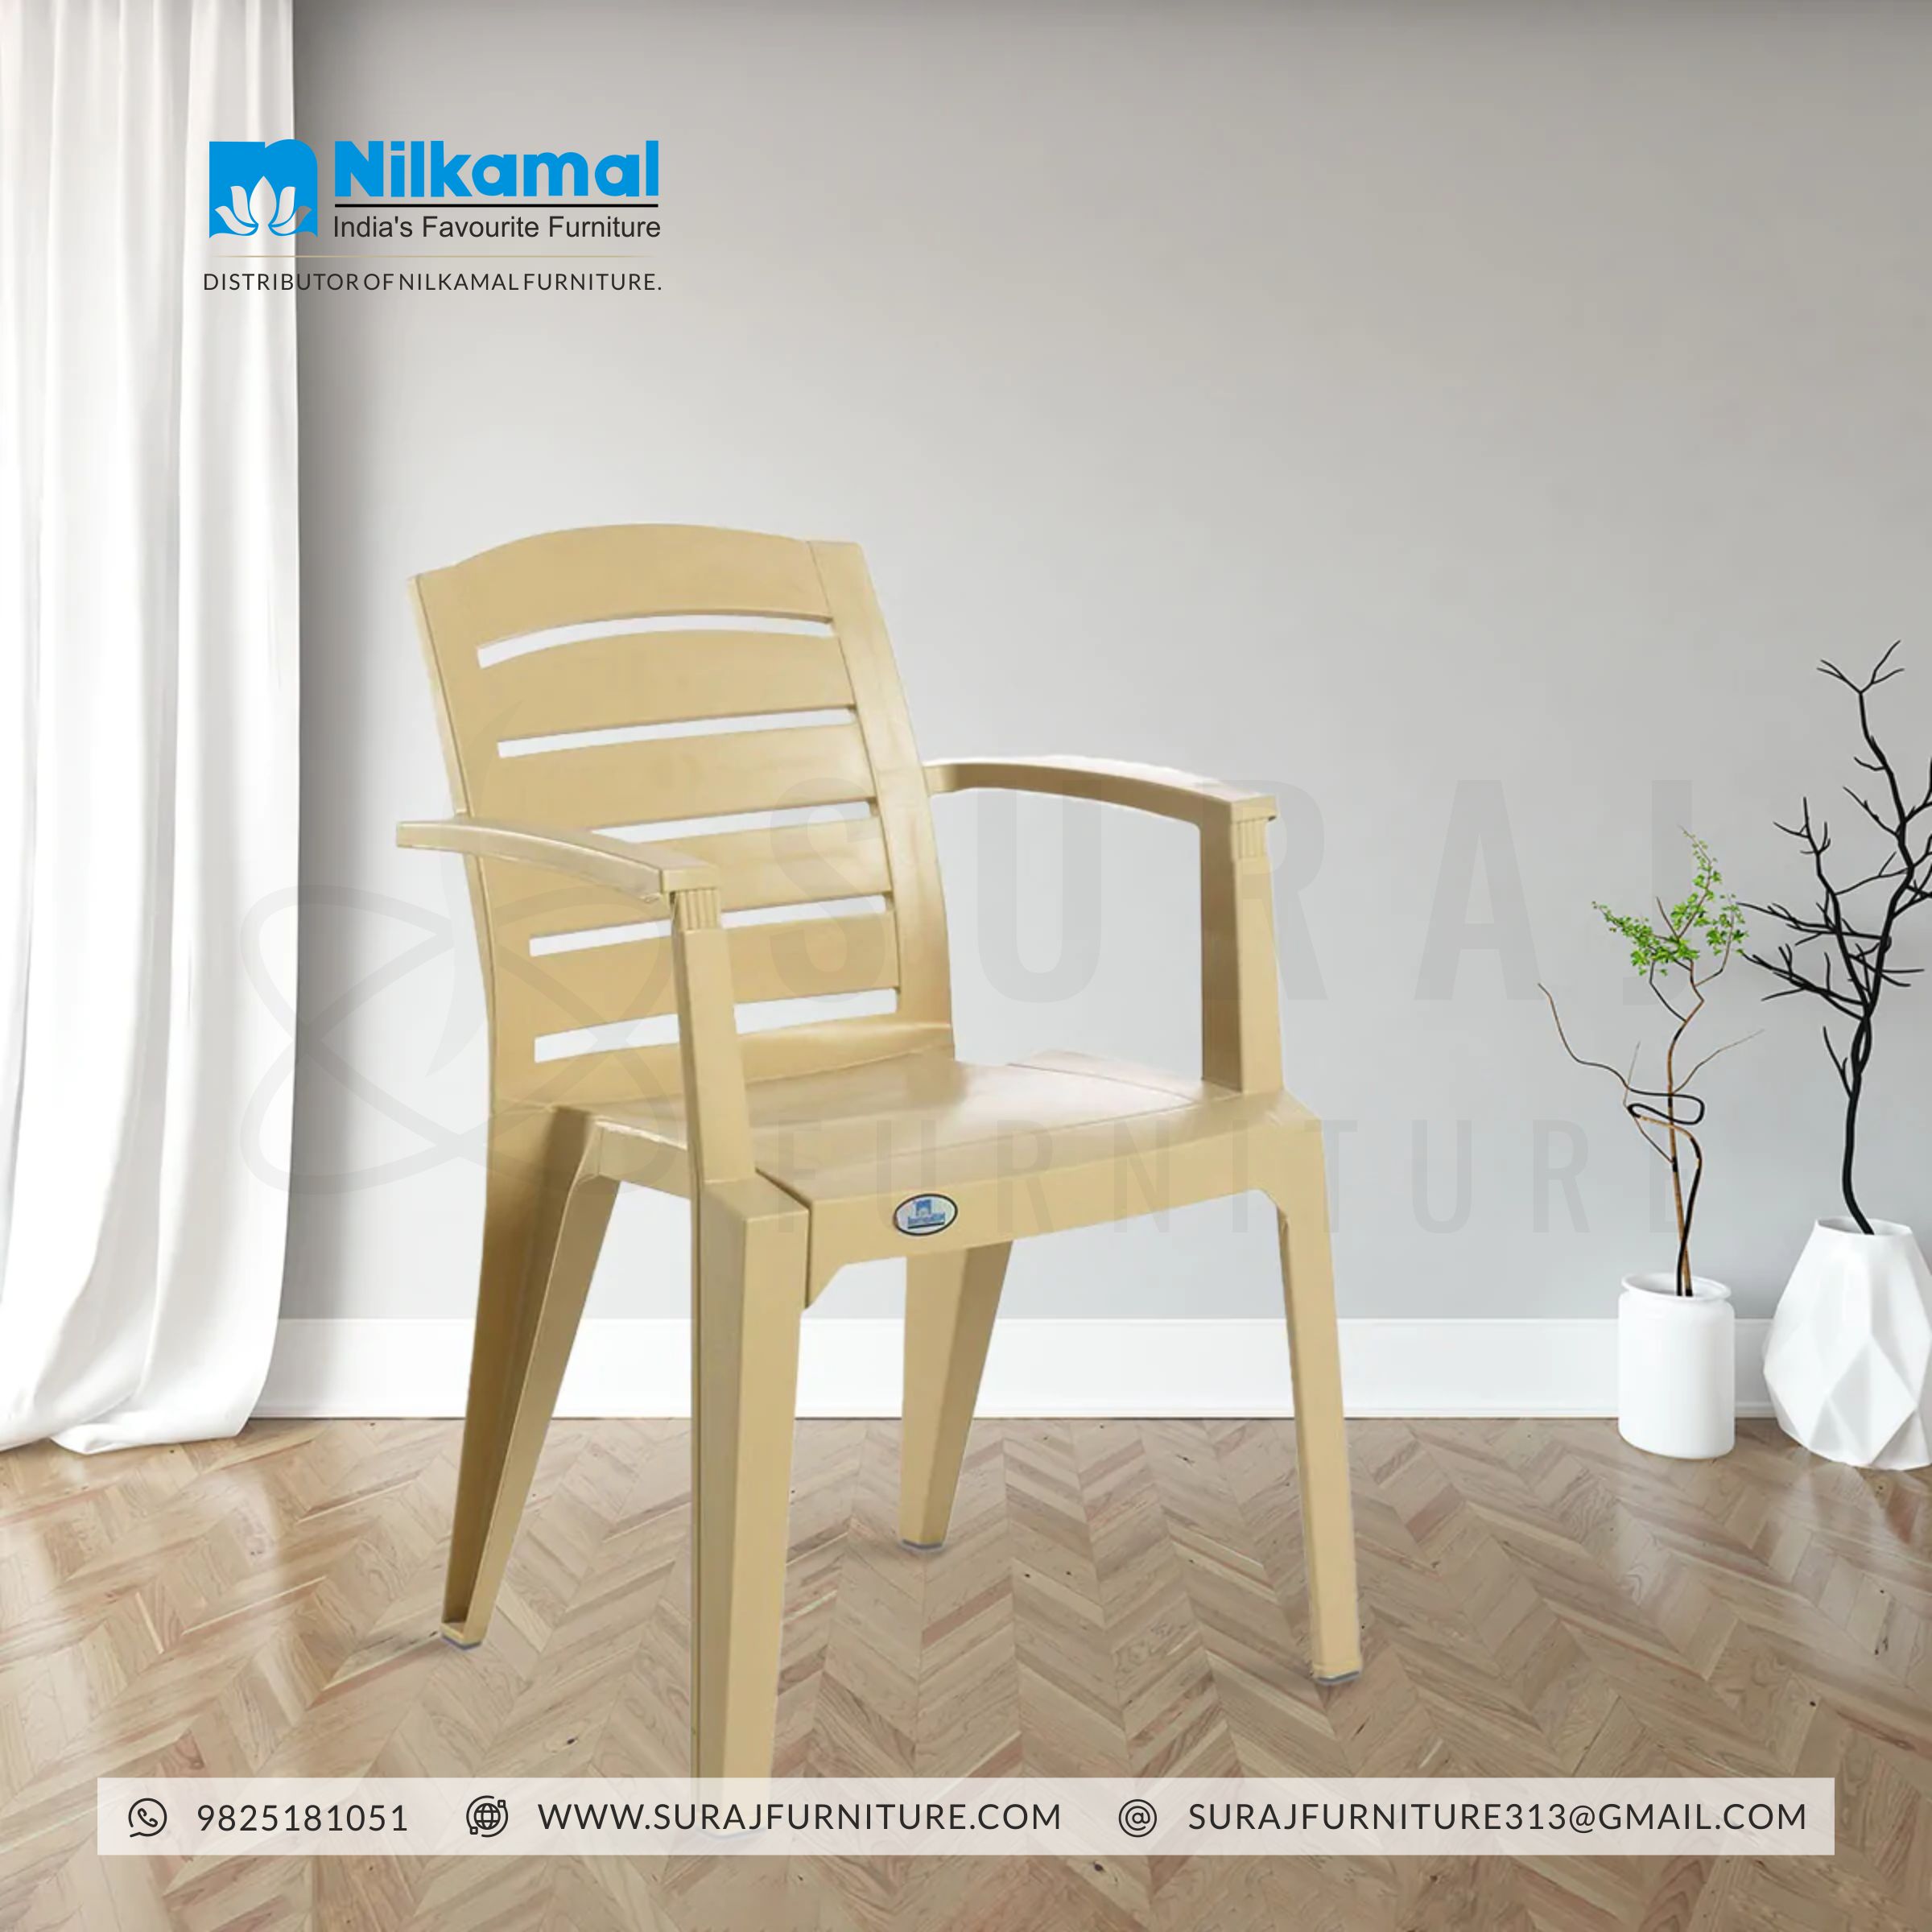 Nilkamal Chair 2135